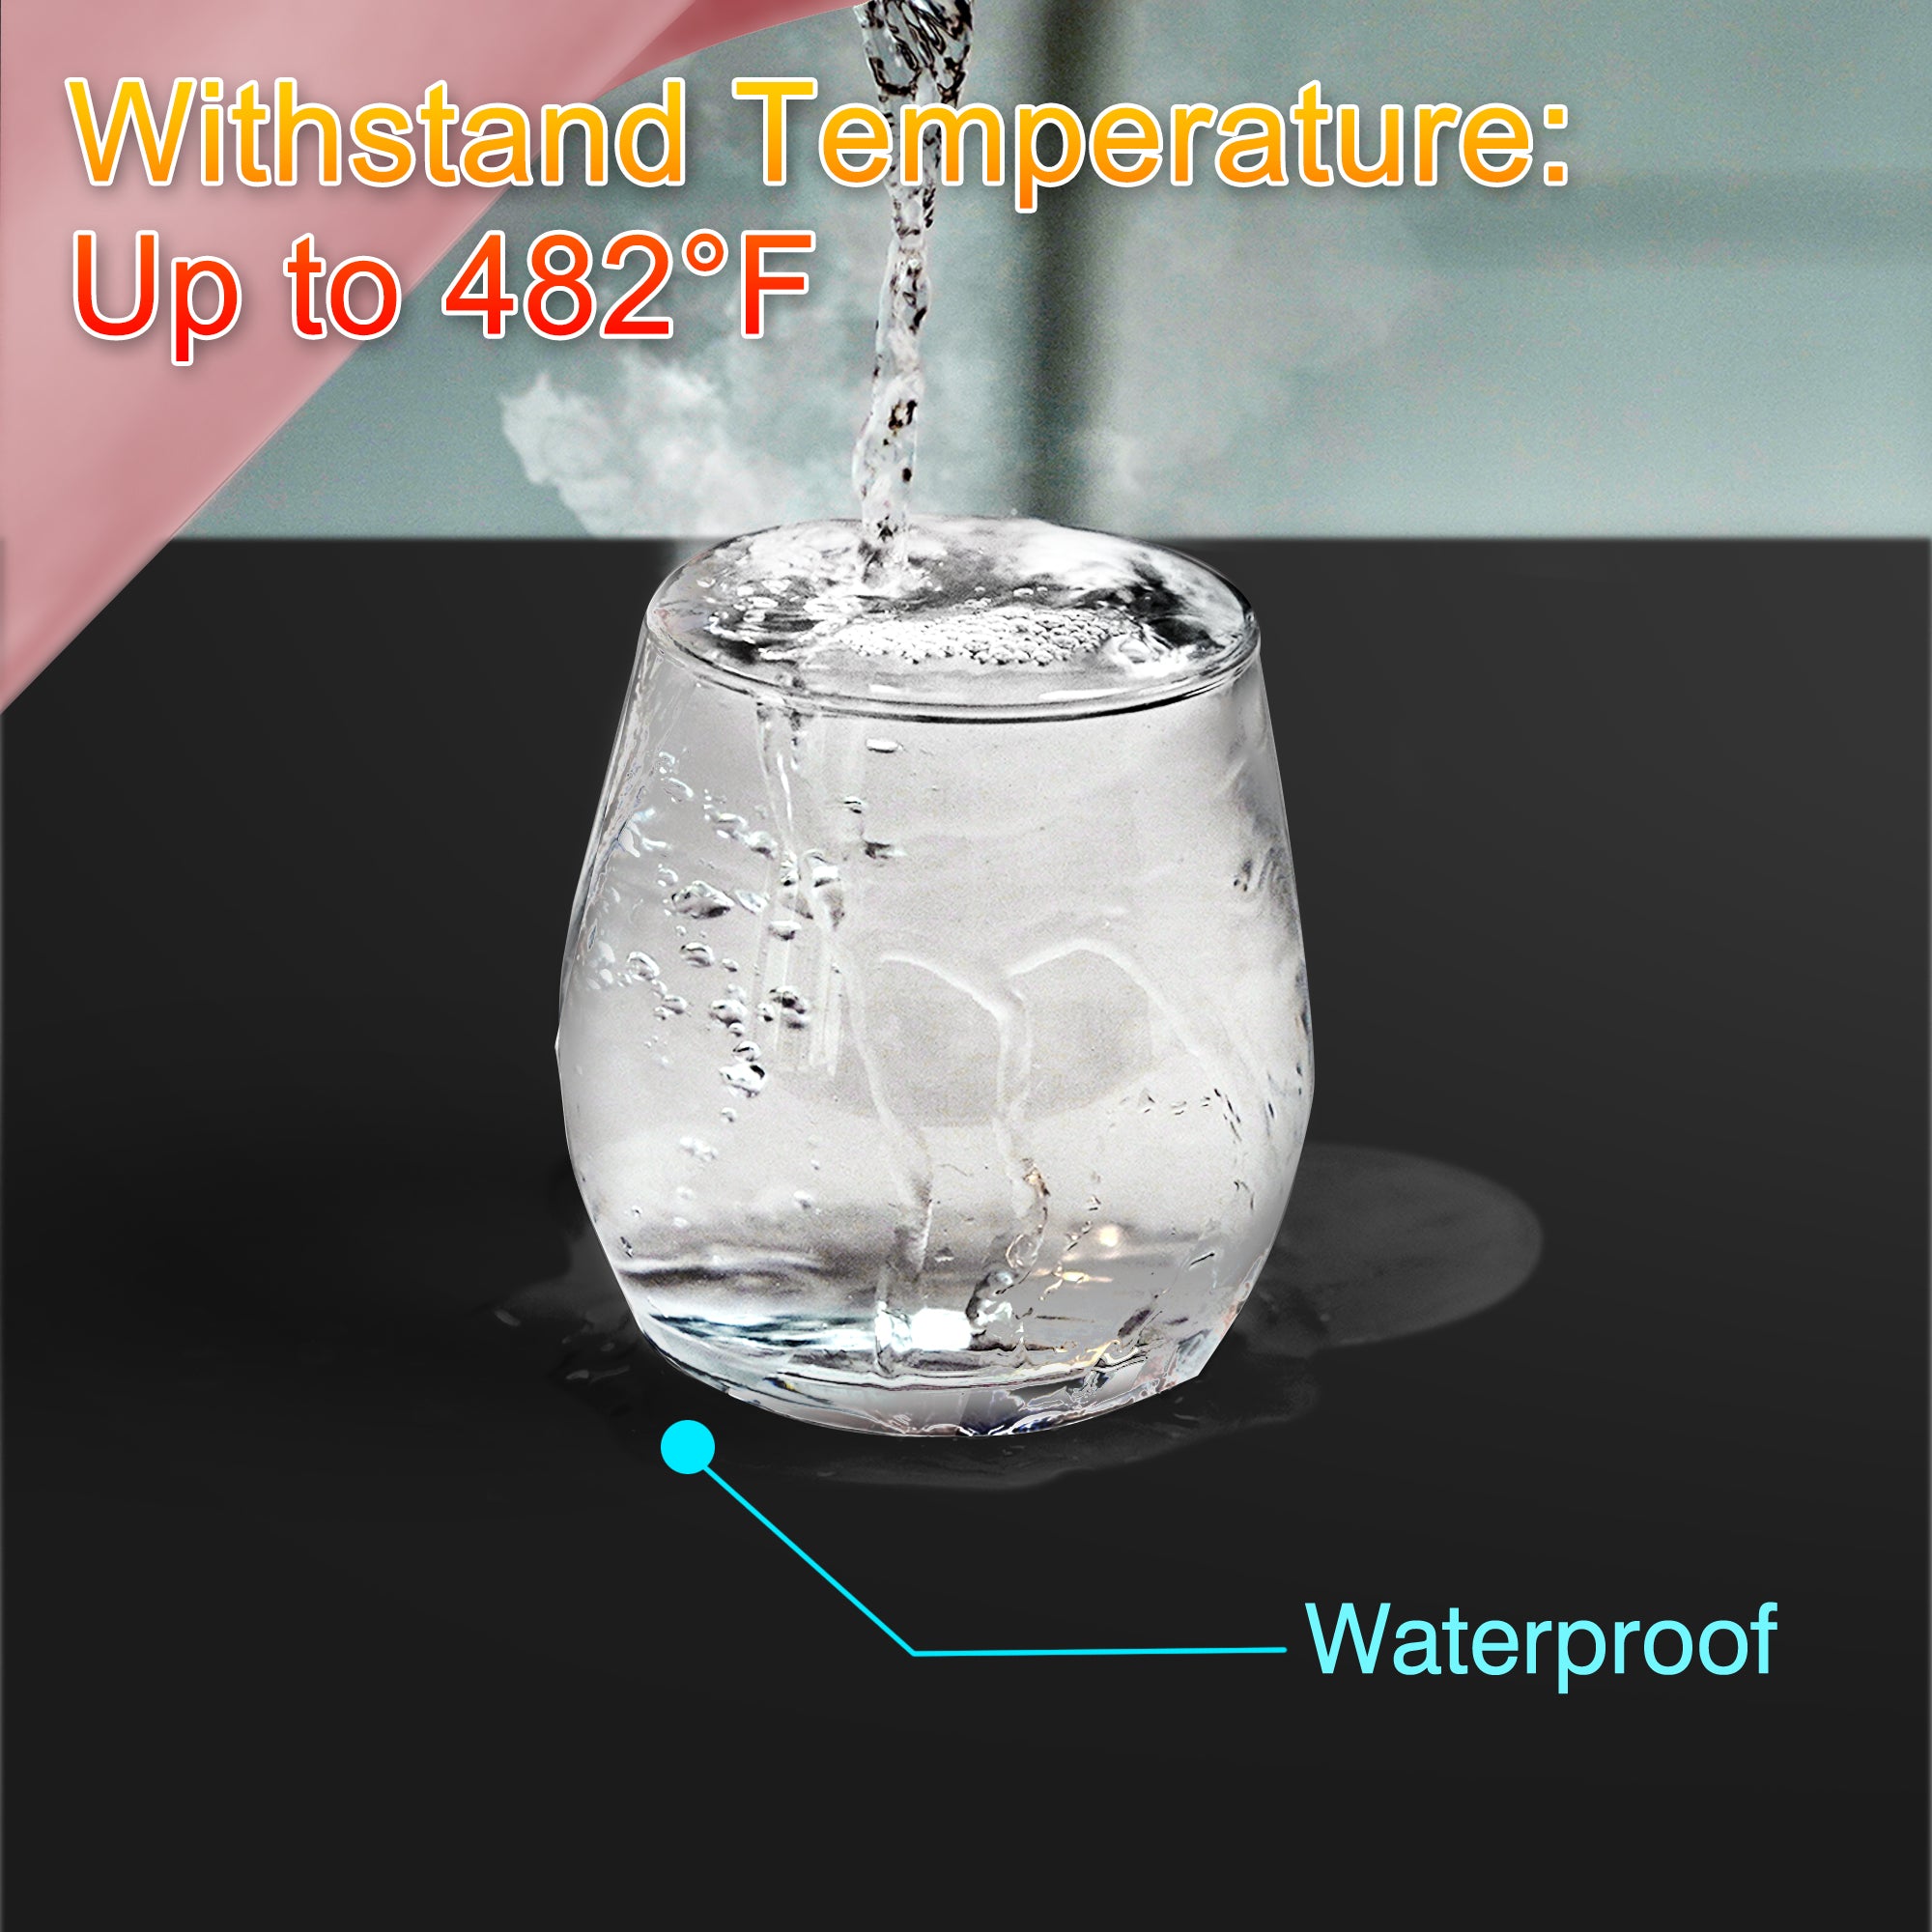 AECHY Heat Resistant Waterproof Silicone Mat 36”x24”x0.08” - aechy